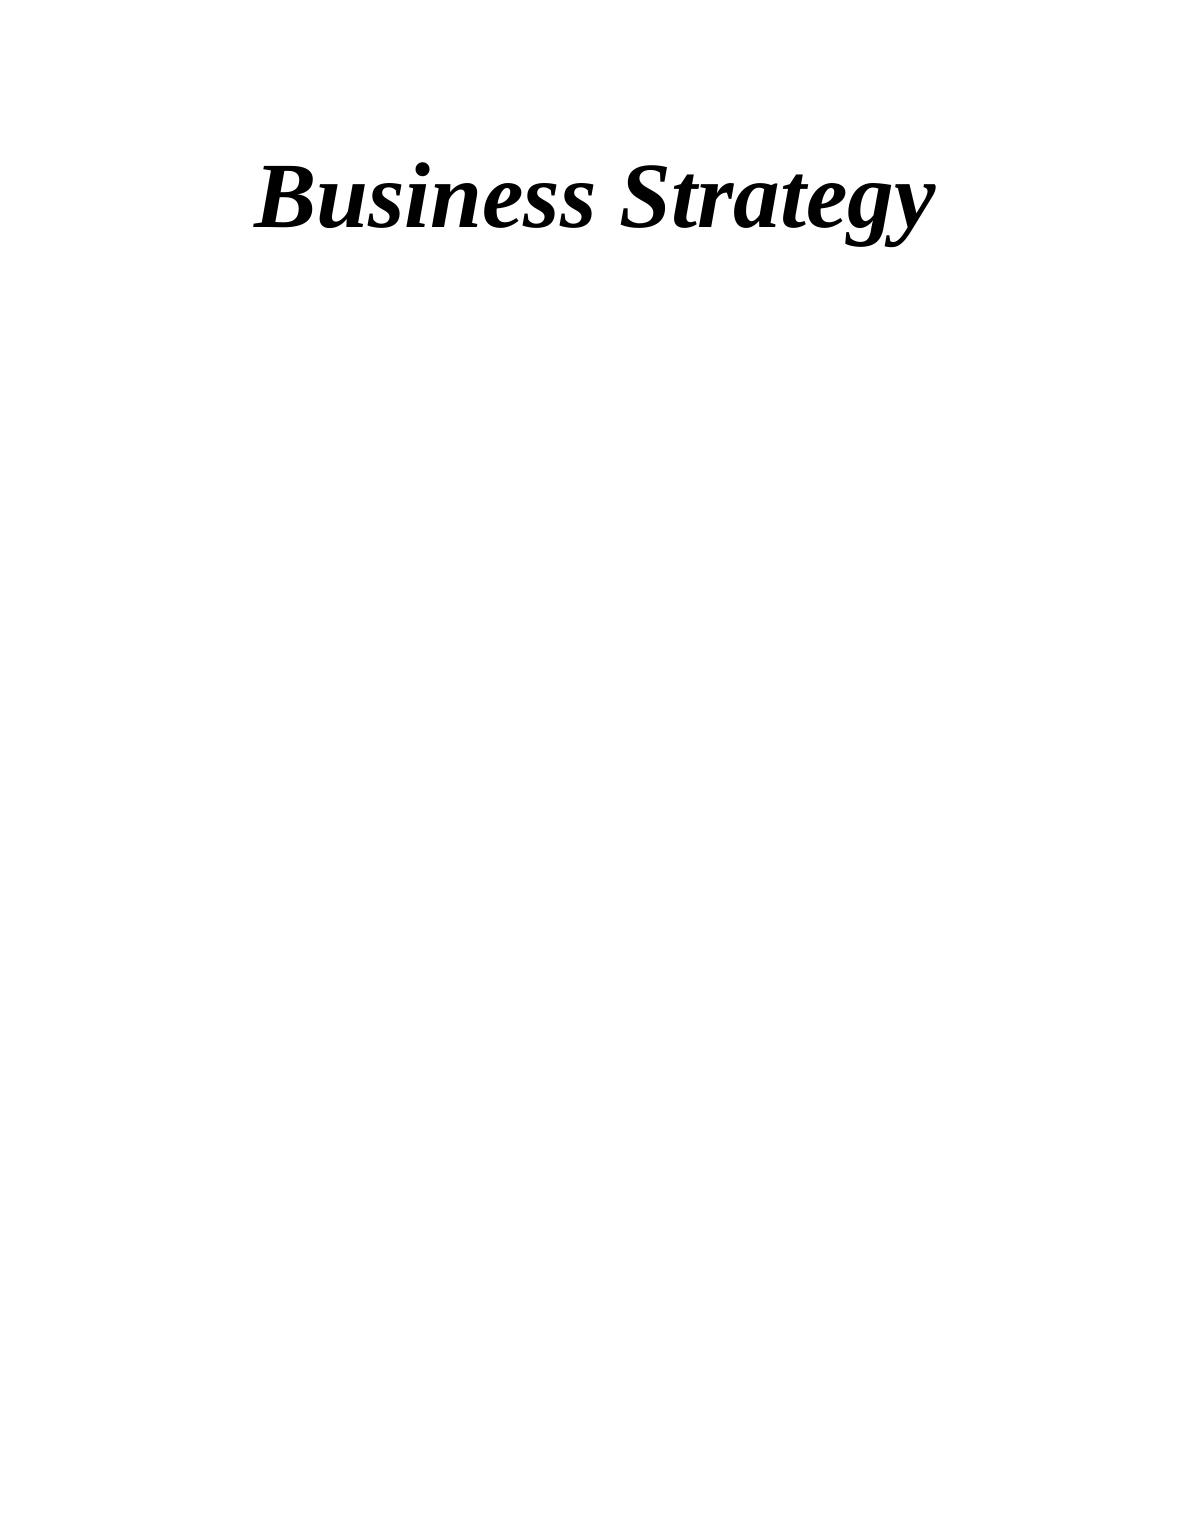 Business Strategy of British Airways_1